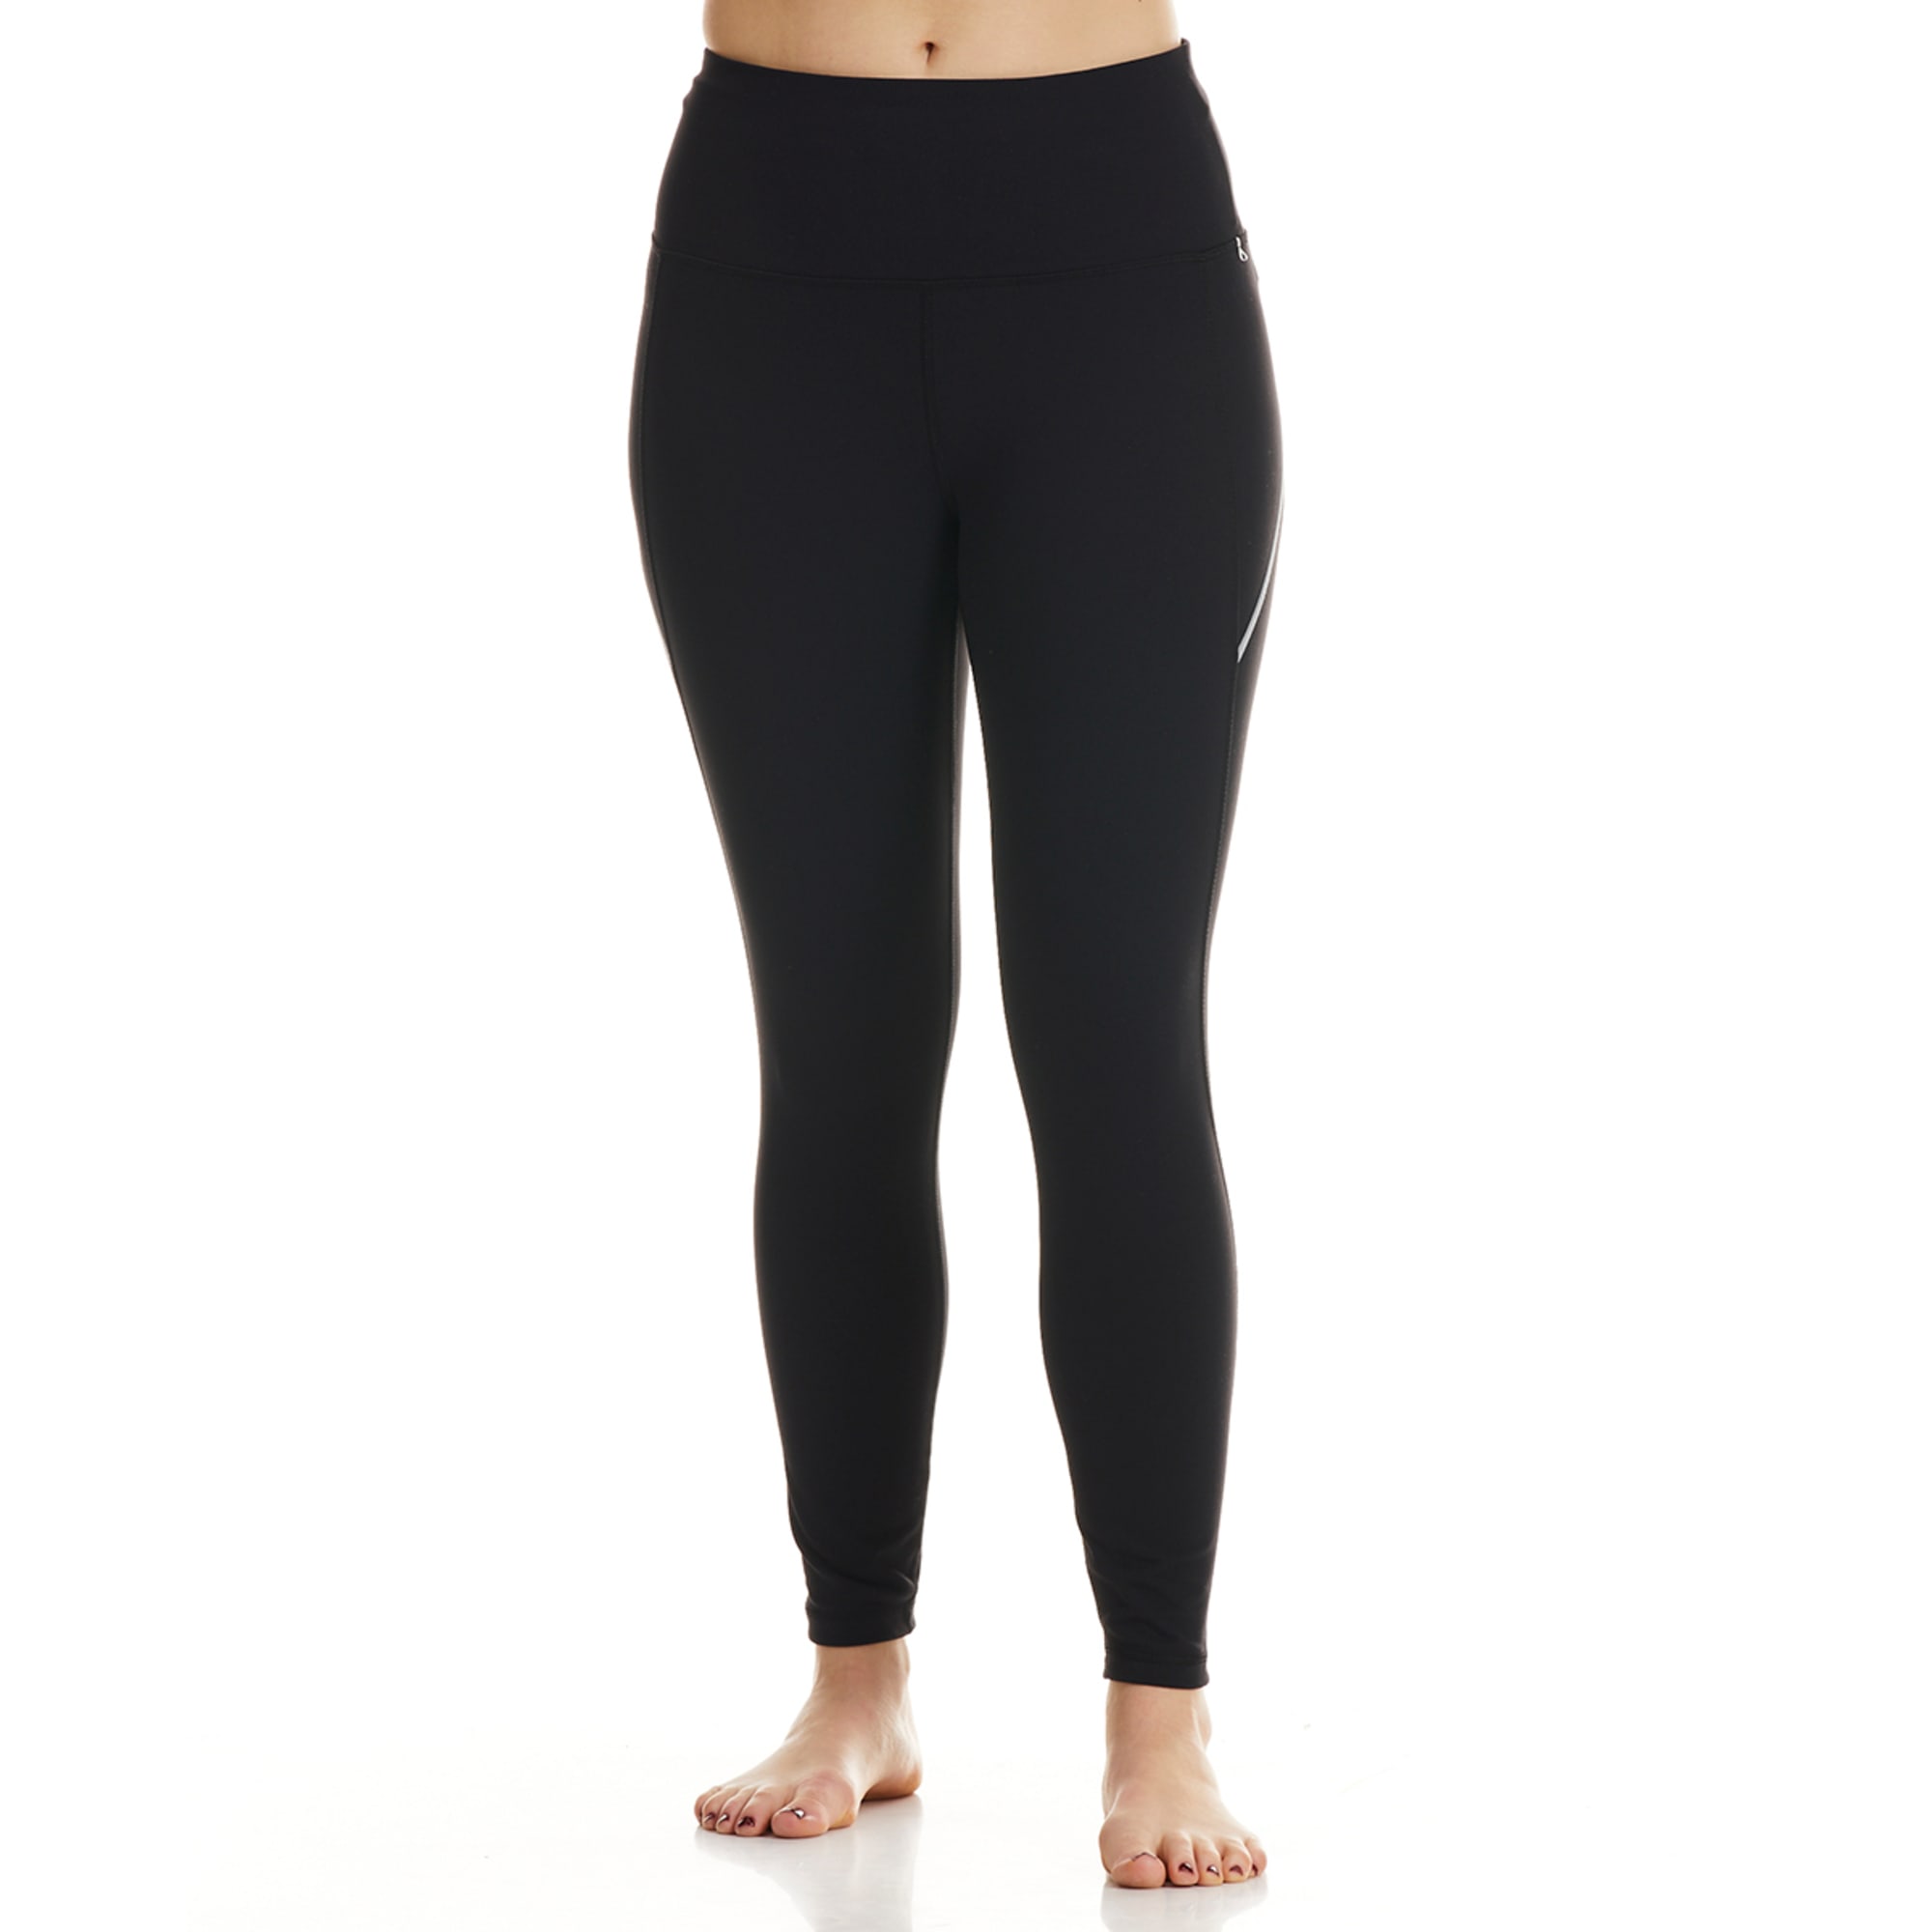 Spyder Active Pants Womens Large Black Leggings Capri Yoga Pockets Athletic